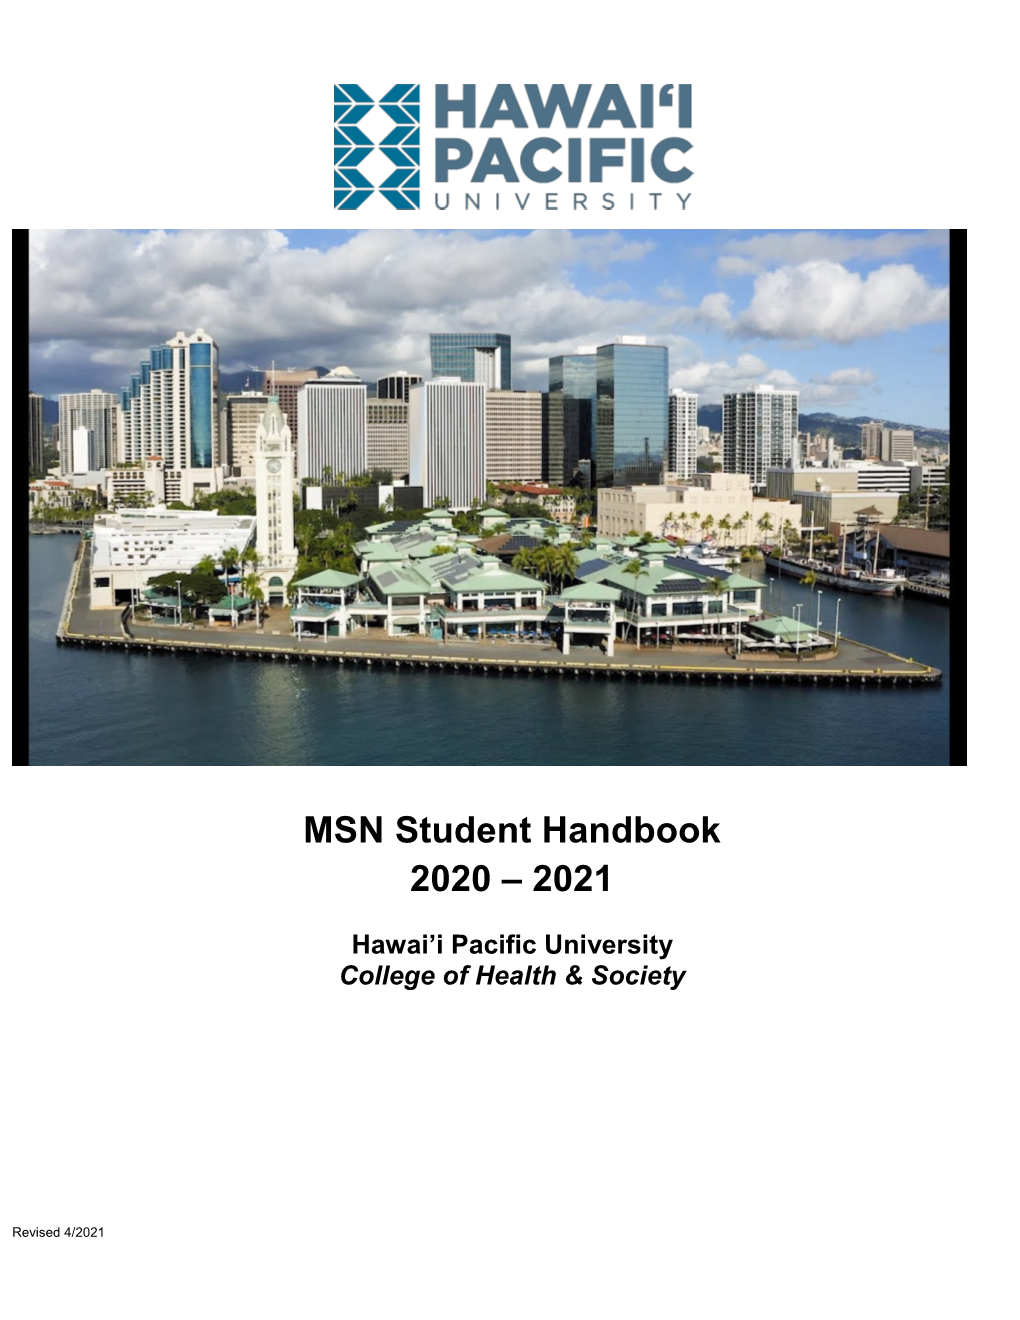 MSN Student Handbook 2020 – 2021